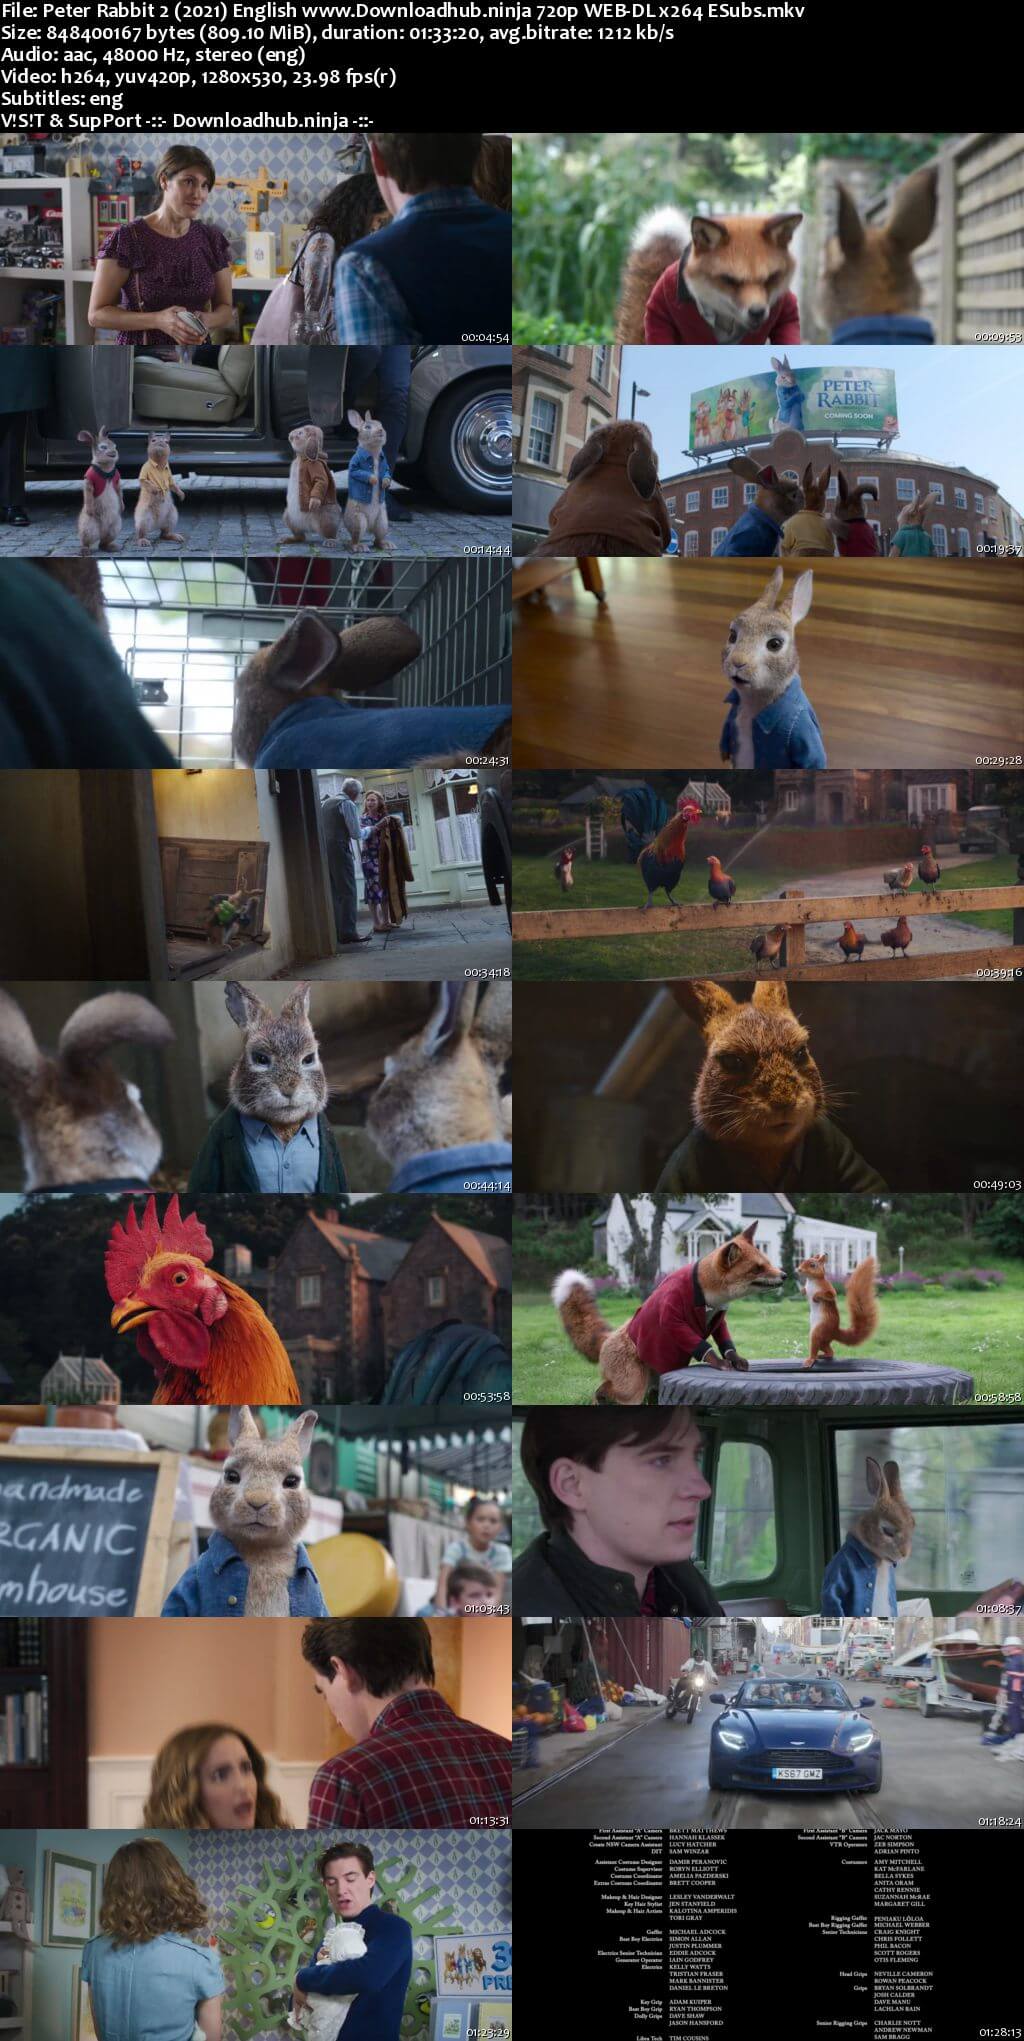 Peter Rabbit 2 The Runaway 2021 English 720p Web-DL 800MB ESubs